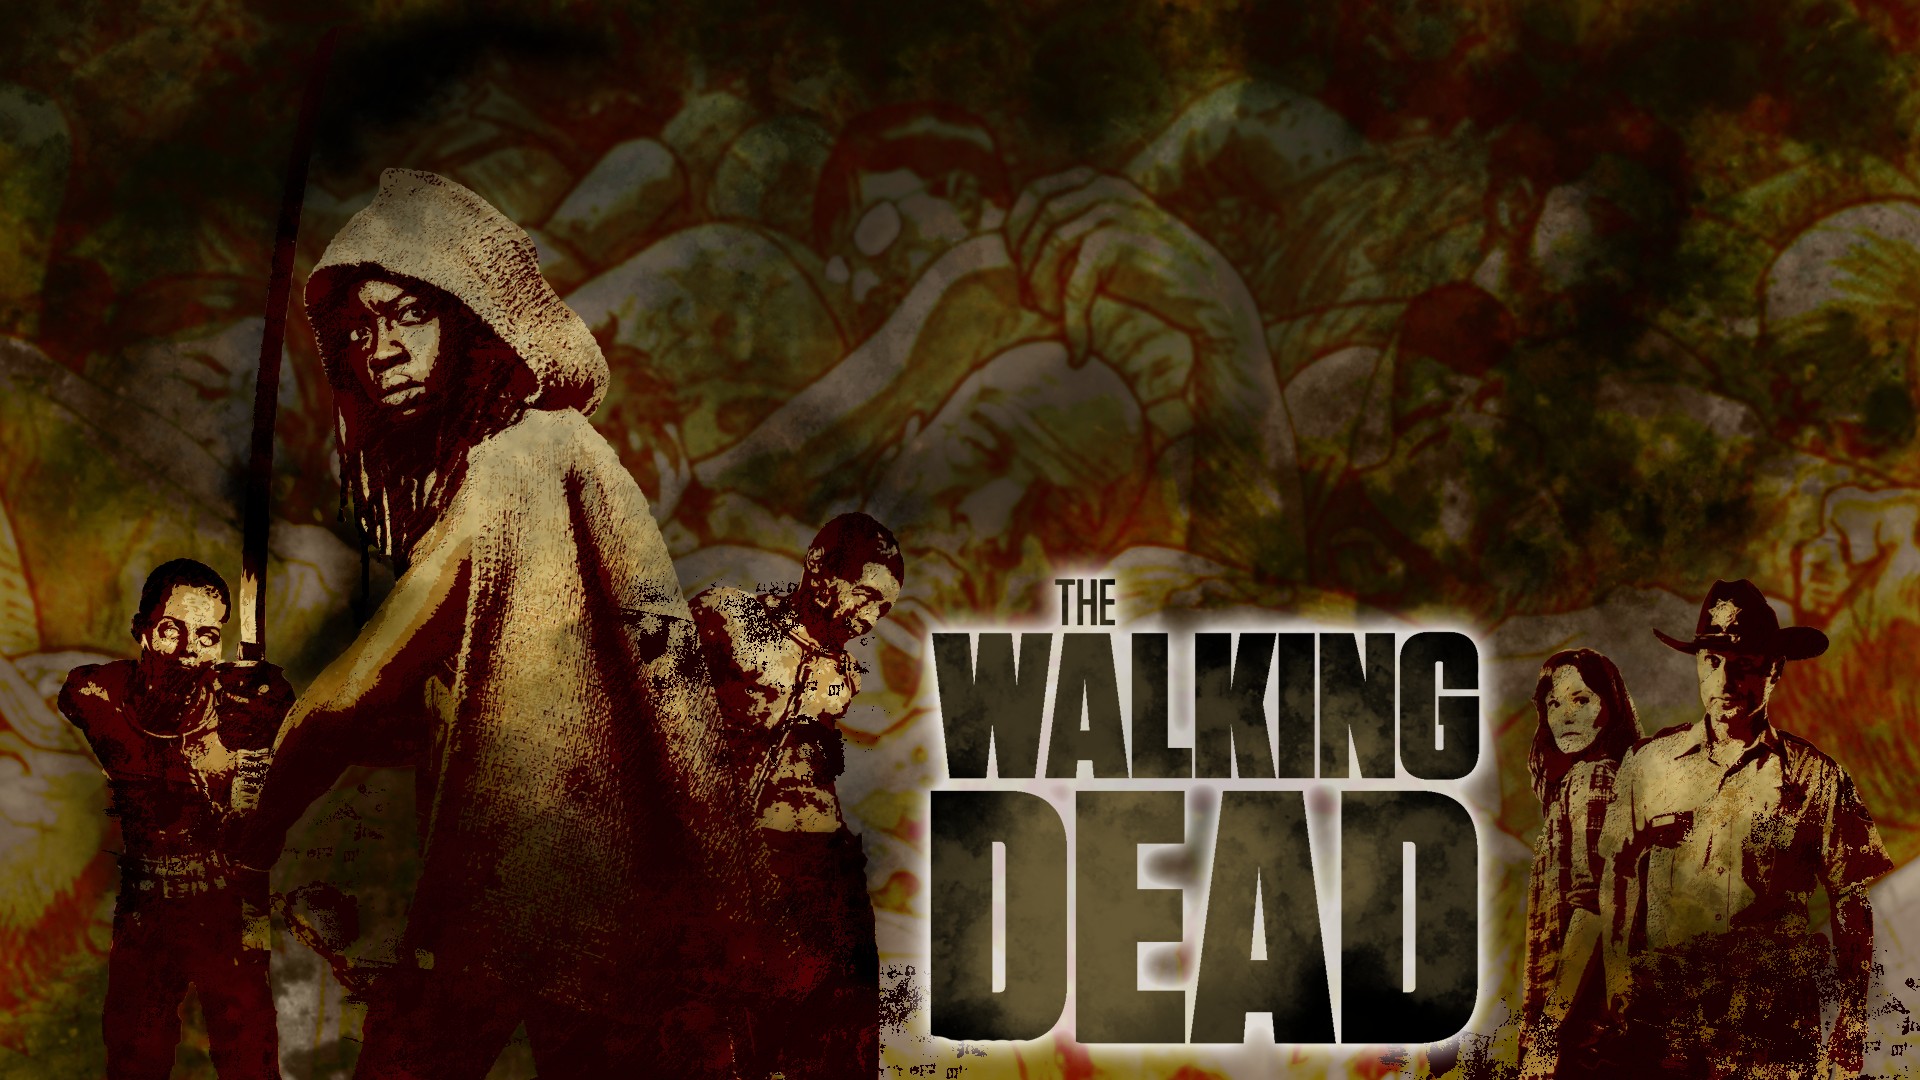 The Walking Dead Wallpaper Full HD Imagebank Biz